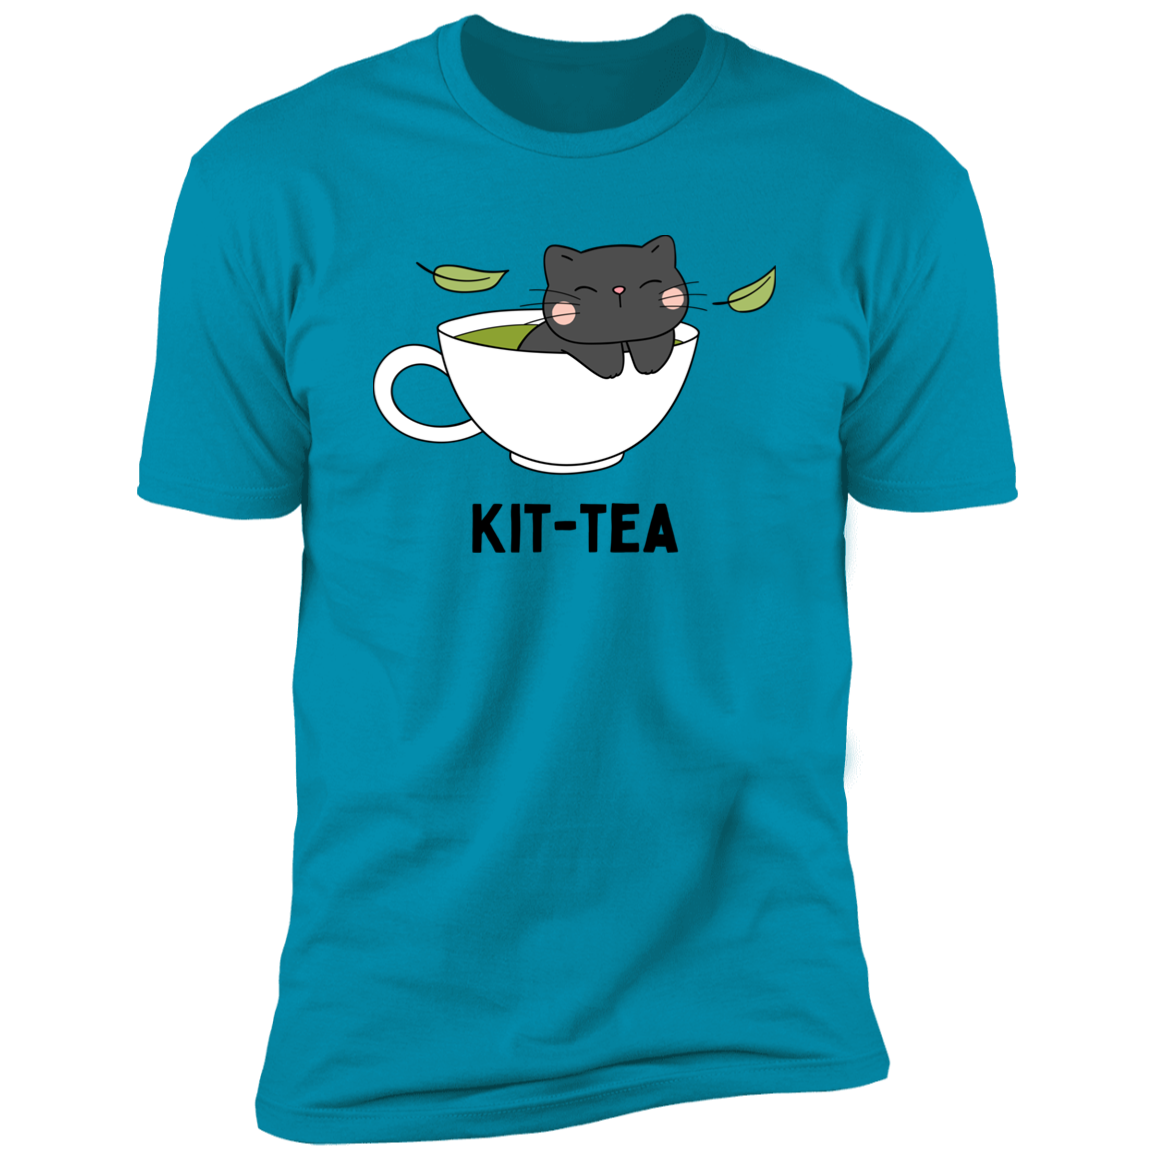 Kitt-Tea T-Shirt, kitty tea shirt, Cat Shirt for humans, funny cat shirt, in turquoise 